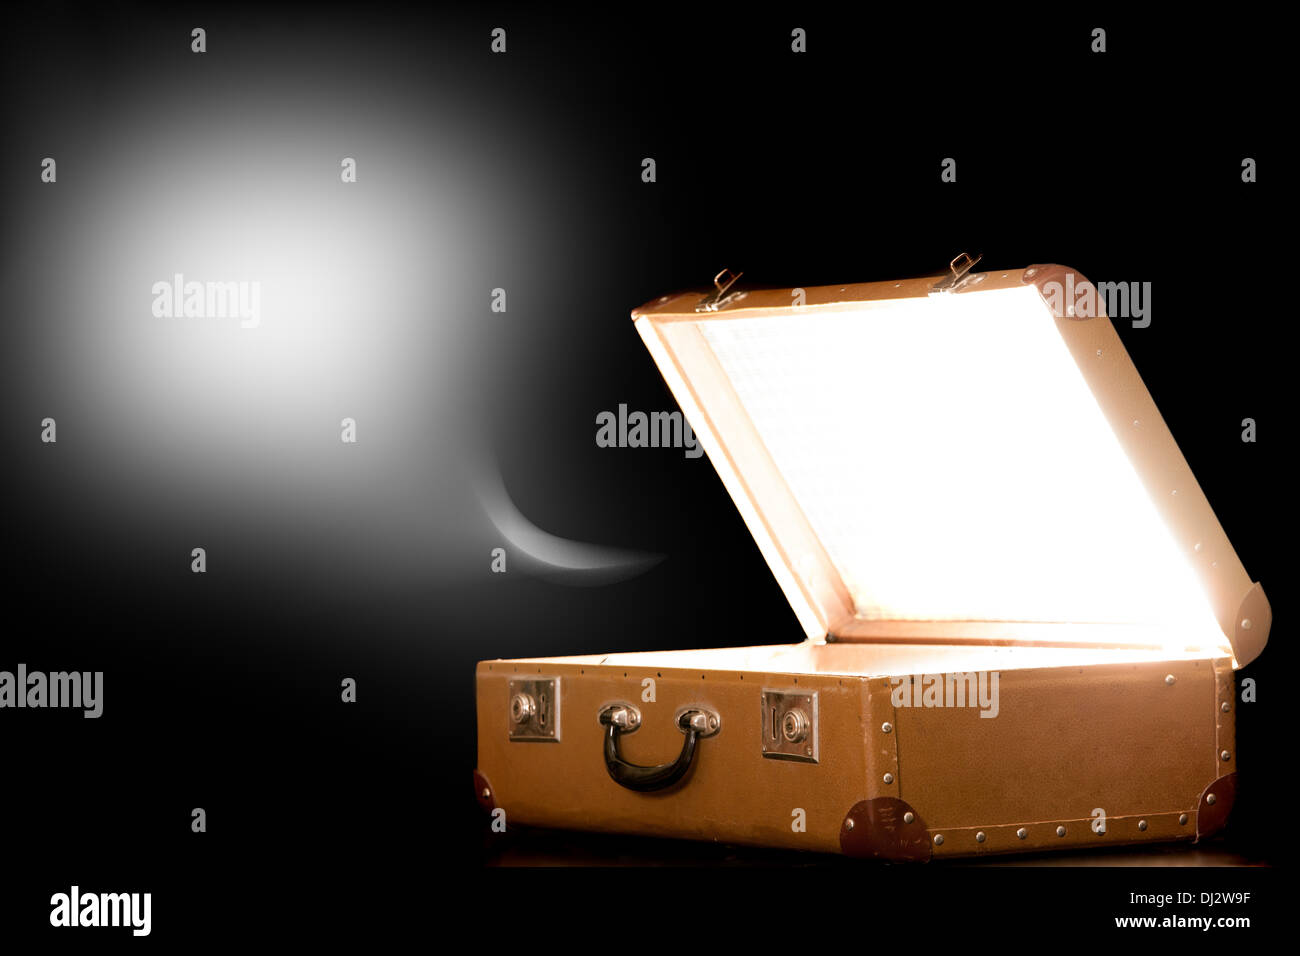 Open suitcase on black background Stock Photo